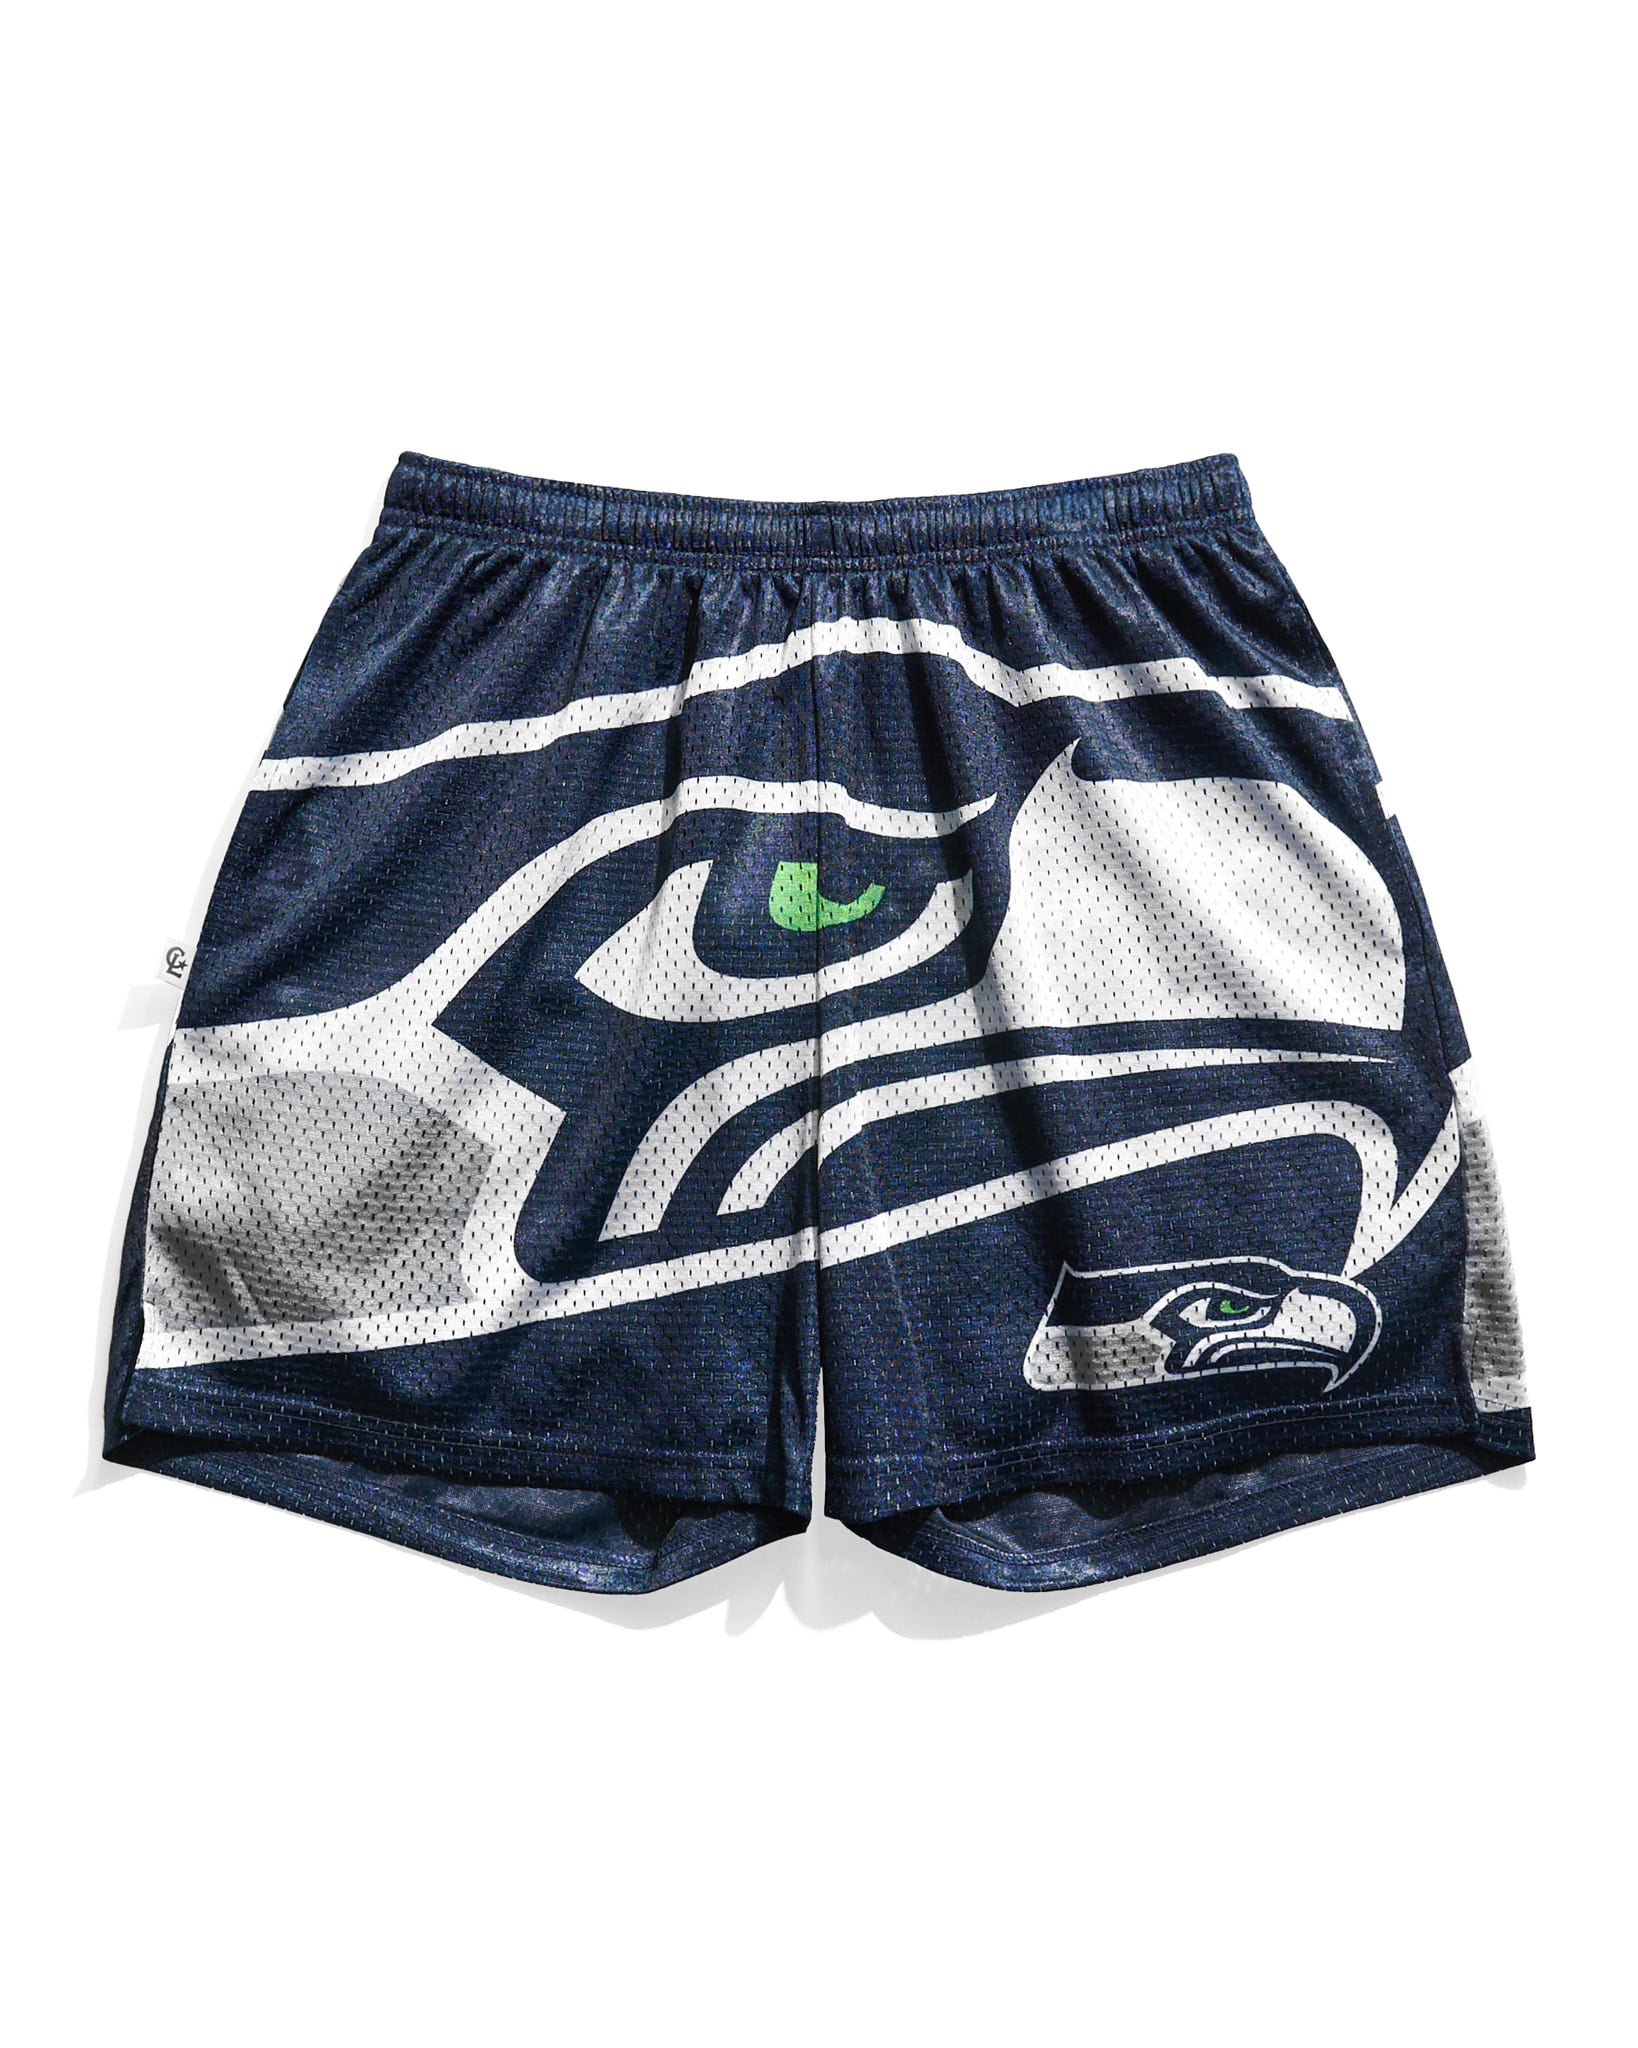 Seattle Seahawks Big Logo Retro Shorts